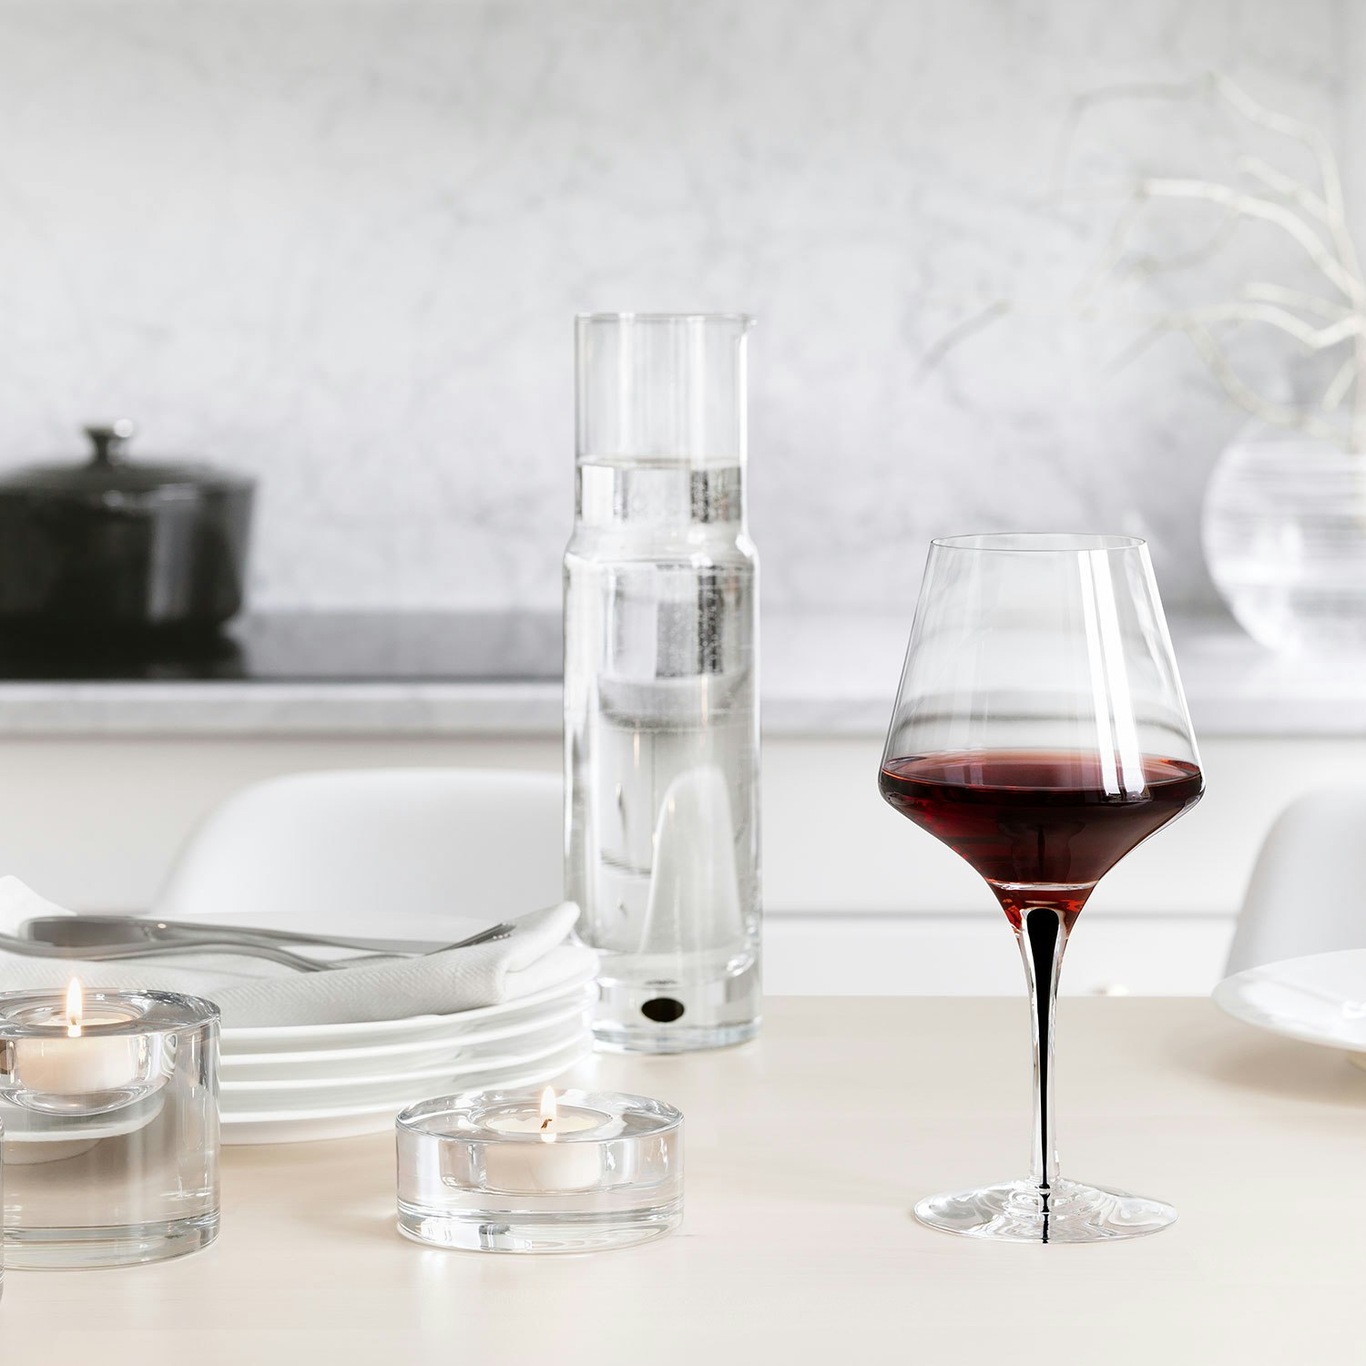 https://royaldesign.com/image/11/orrefors-metropol-wine-glass-61-cl-1?w=800&quality=80